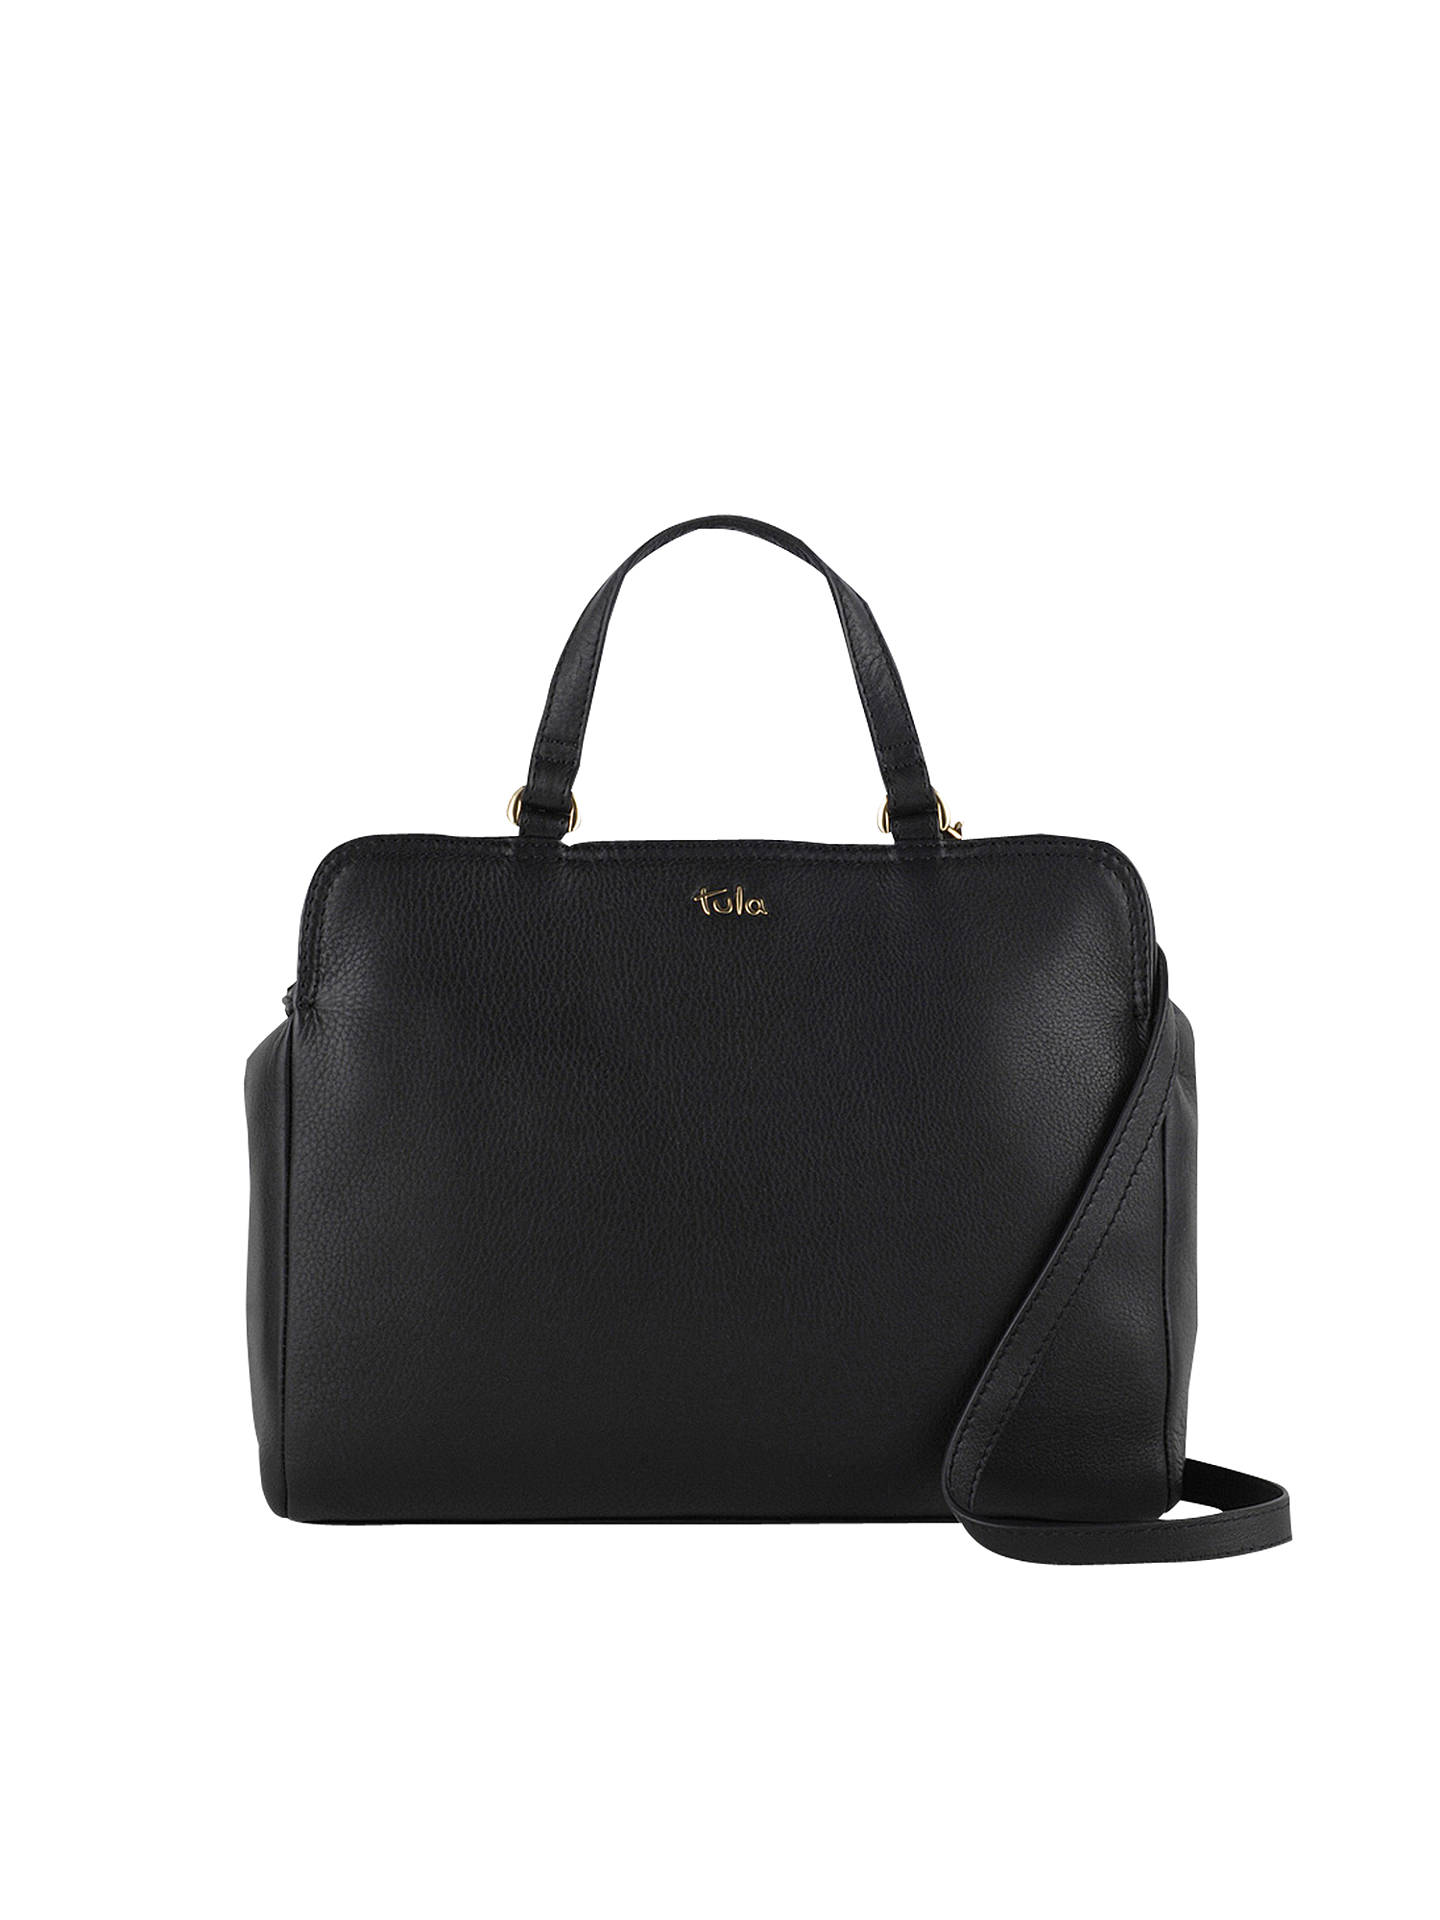 Tula Nappa Originals Leather Medium Tote Bag at John Lewis & Partners